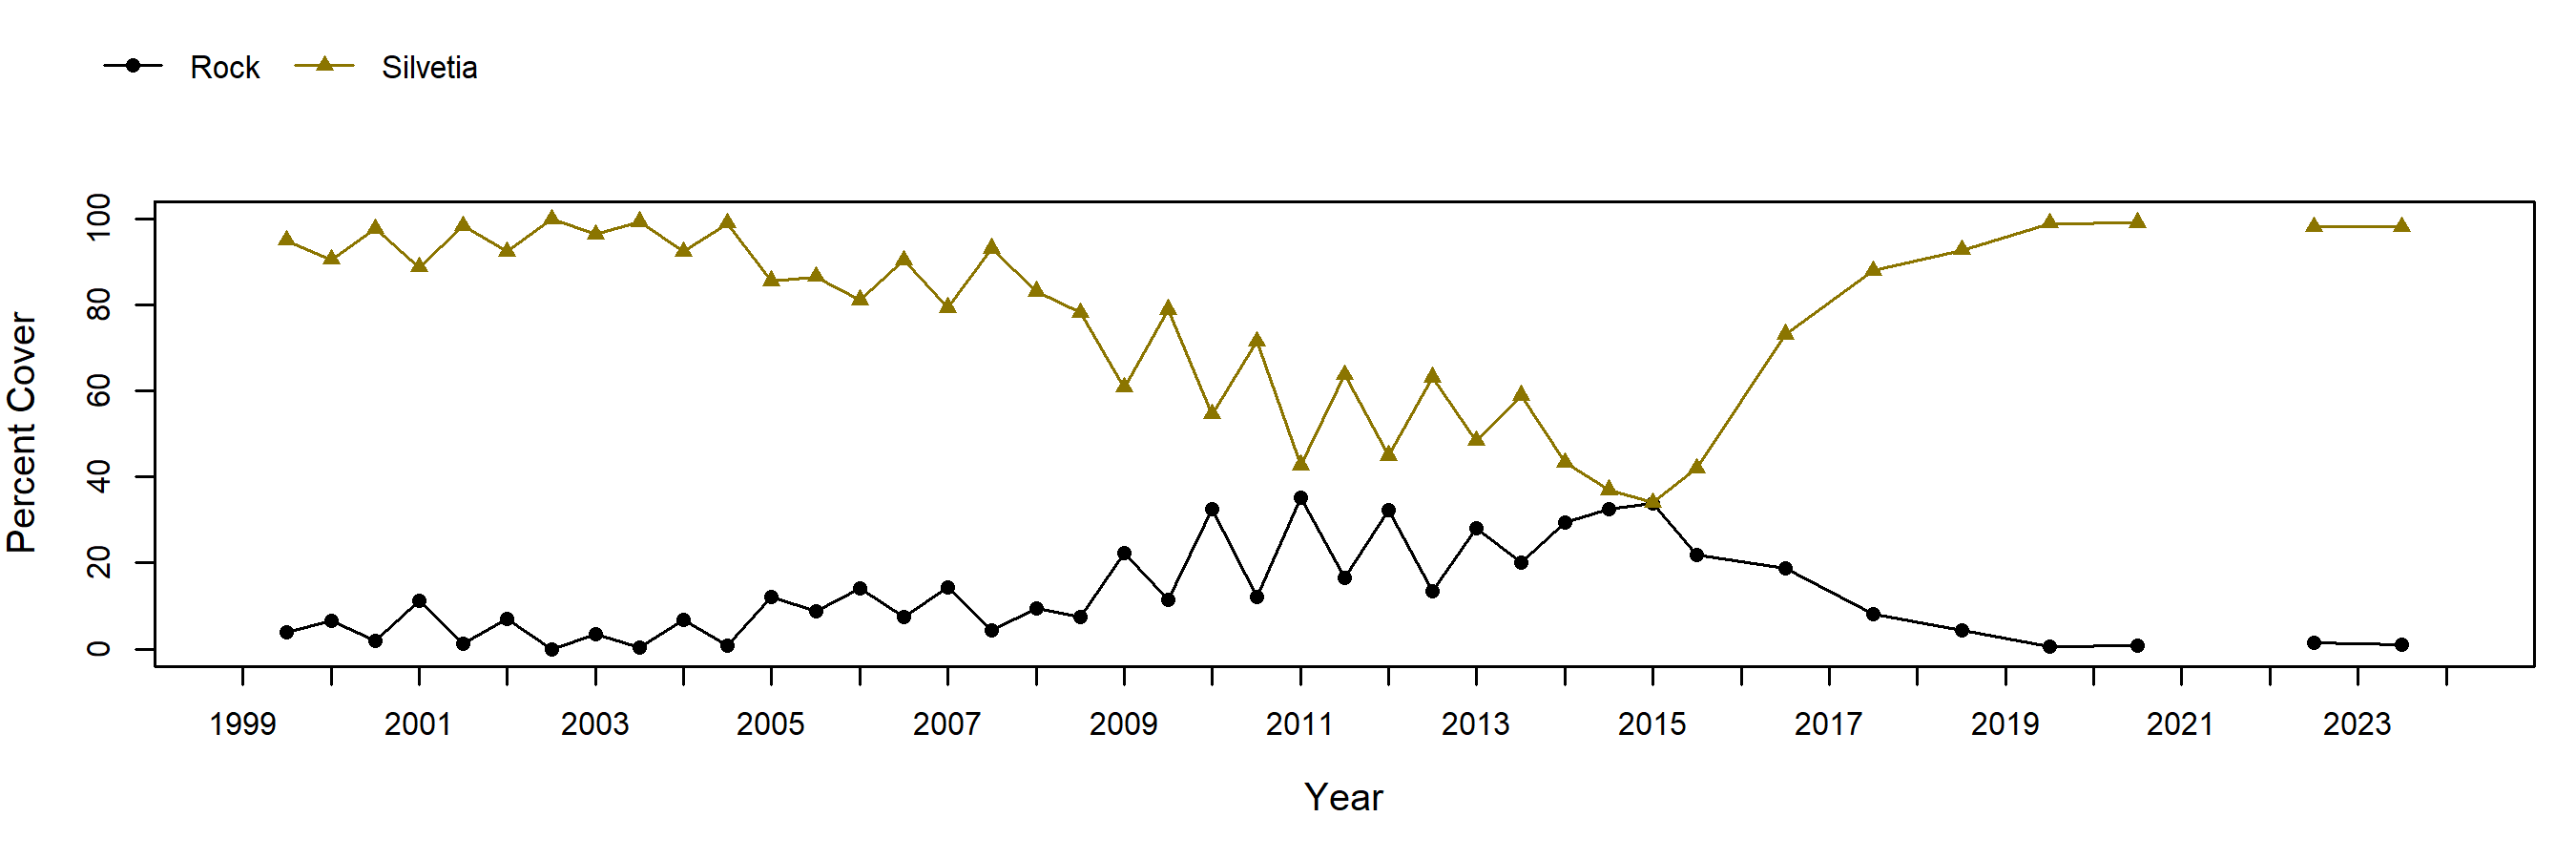 Point Fermin Silvetia trend plot